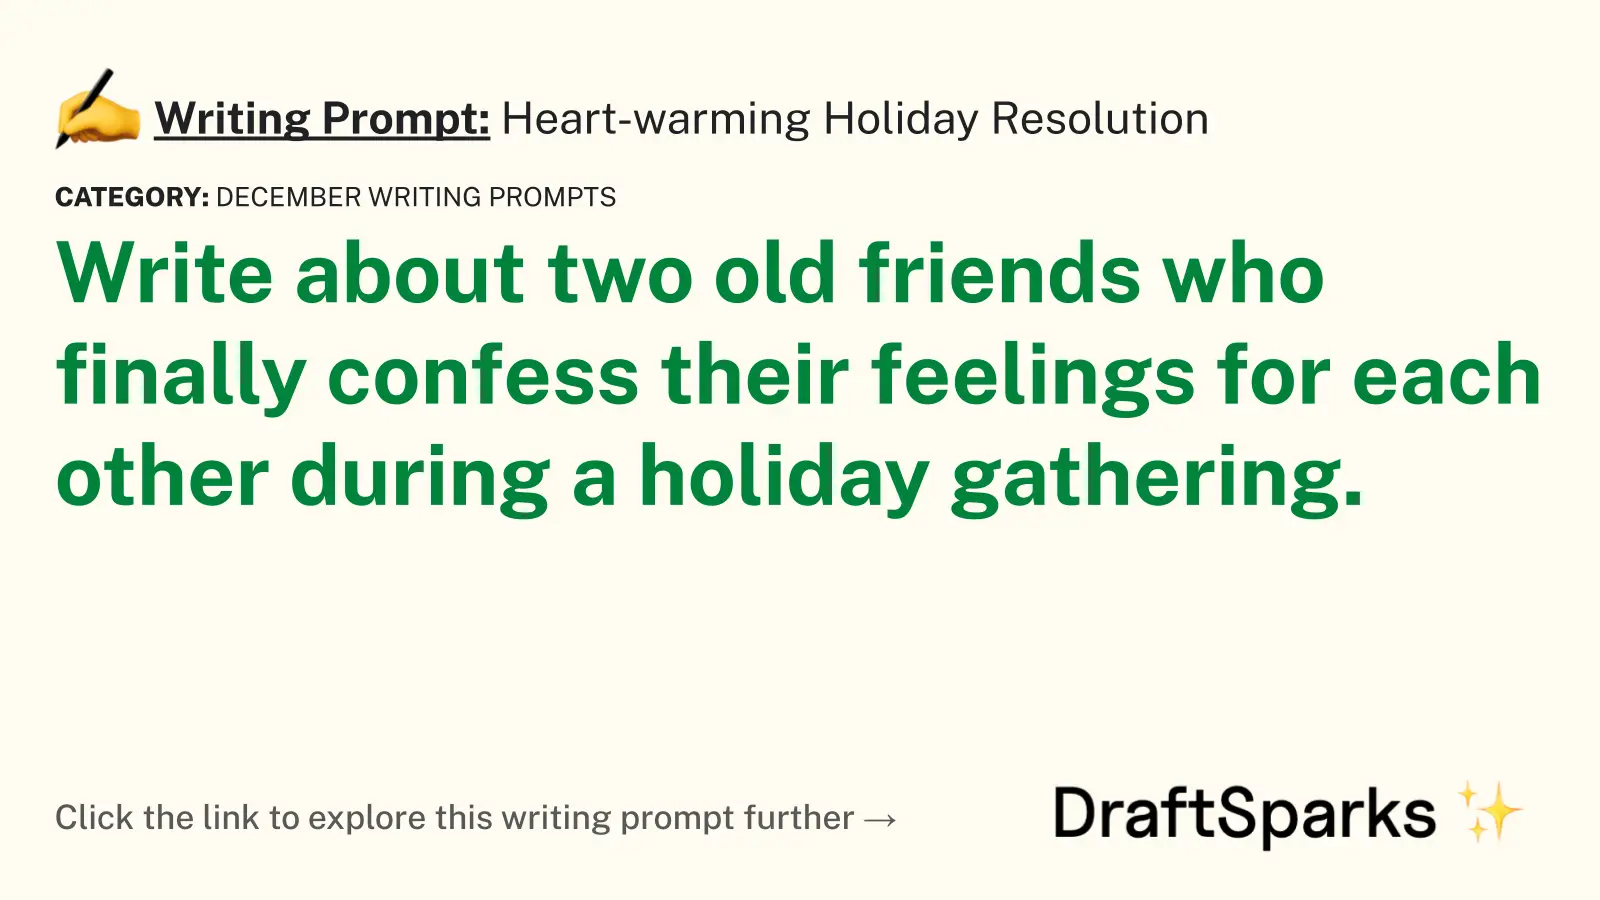 Heart-warming Holiday Resolution